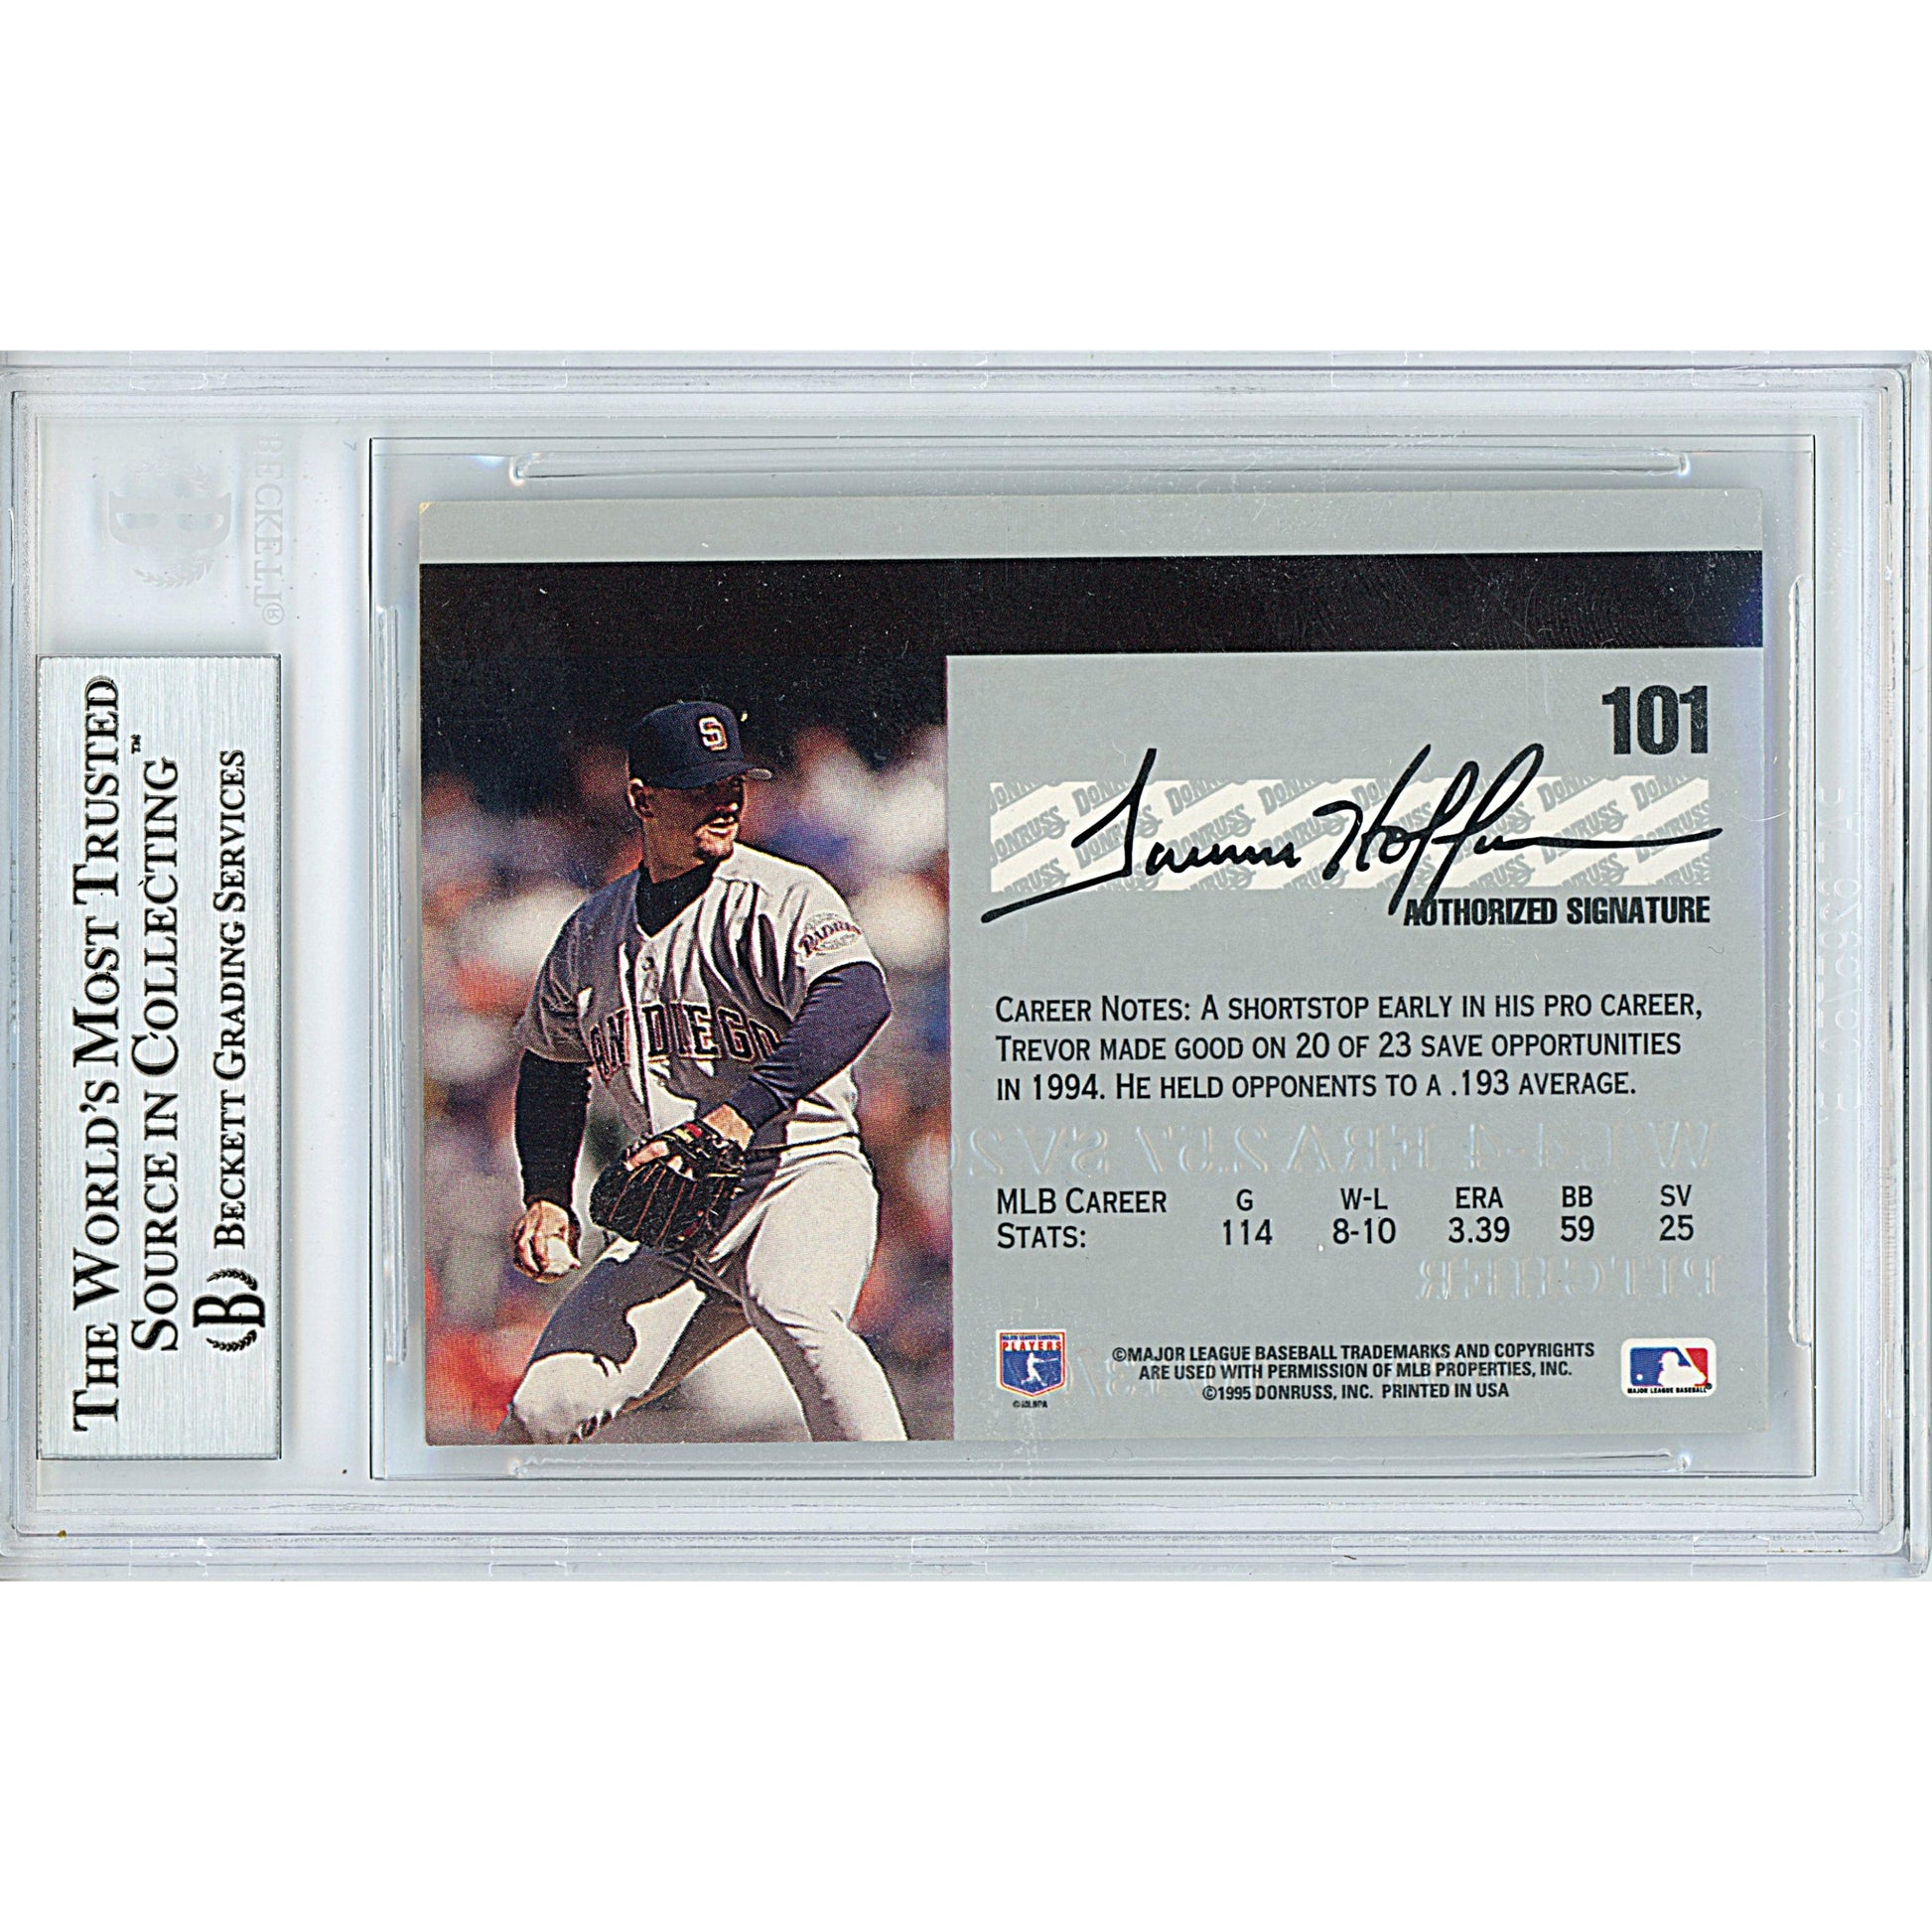 Baseballs- Autographed- Trevor Hoffman Signed San Diego Padres 1995 Studio Base Set Baseball Trading Card - Beckett BGS BAS Slabbed - Encapsulated - 00012867203 - 103